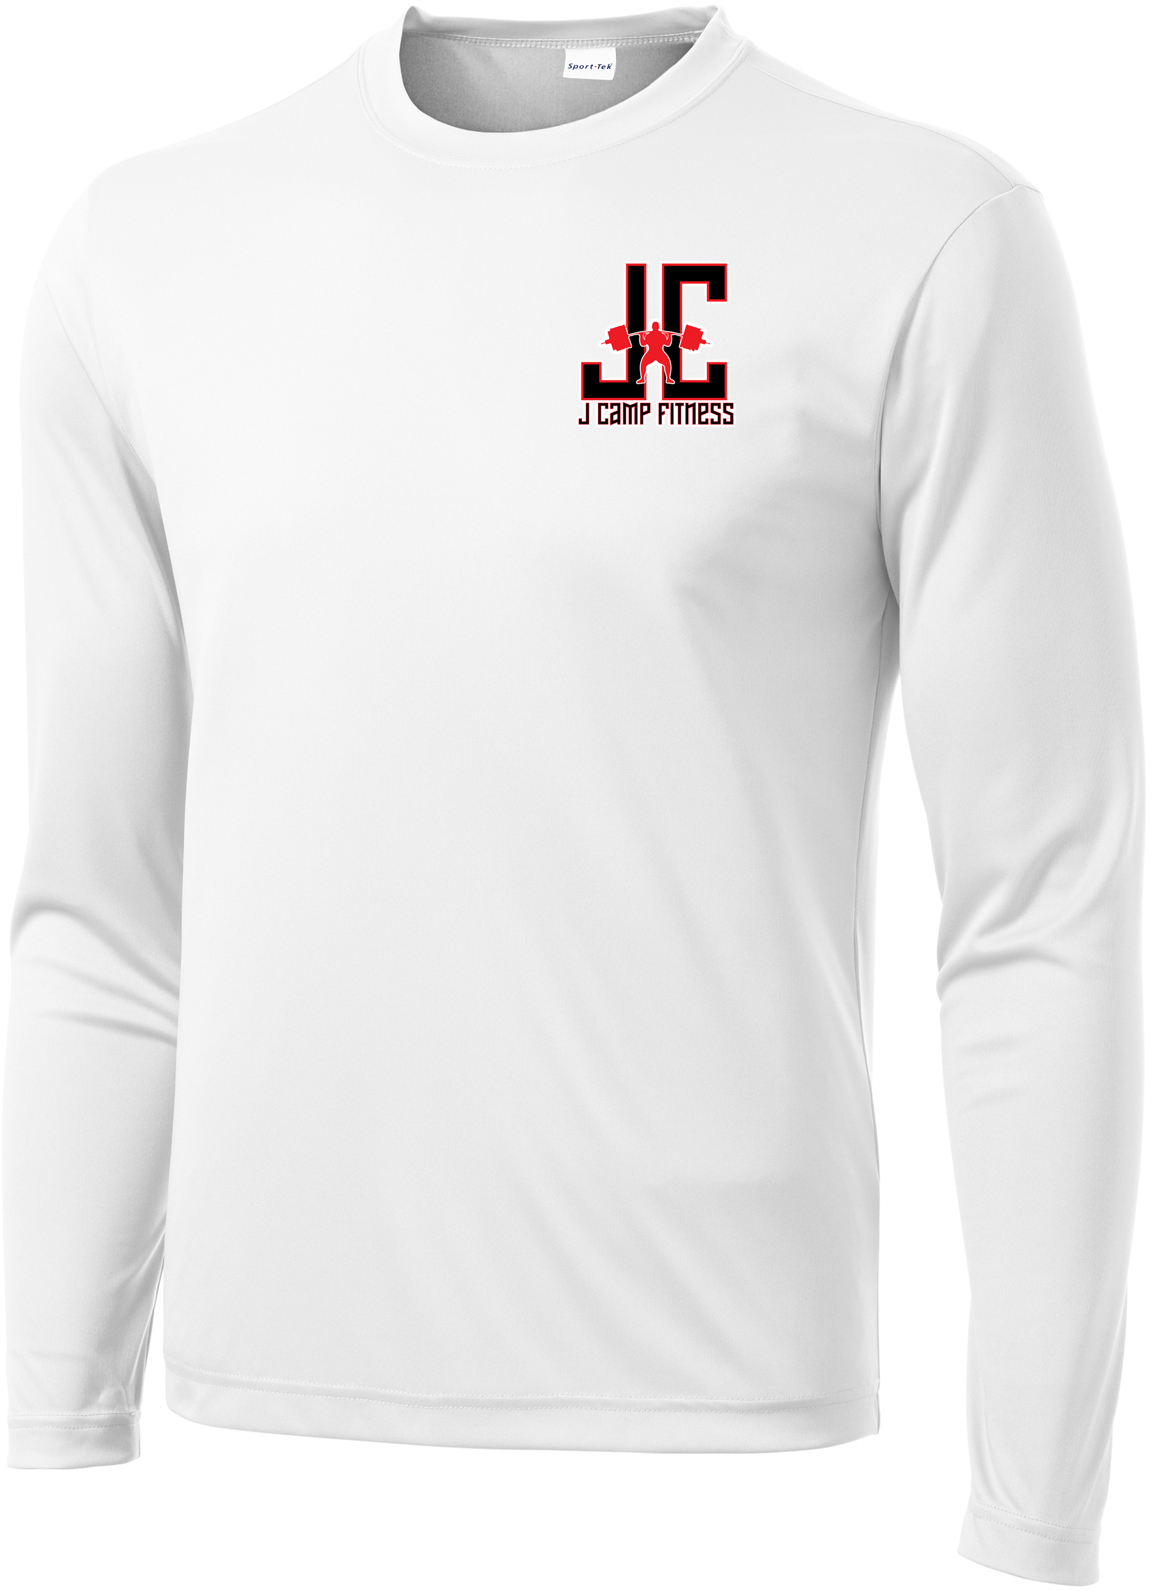 J Camp Fitness Long Sleeve Performance Shirt